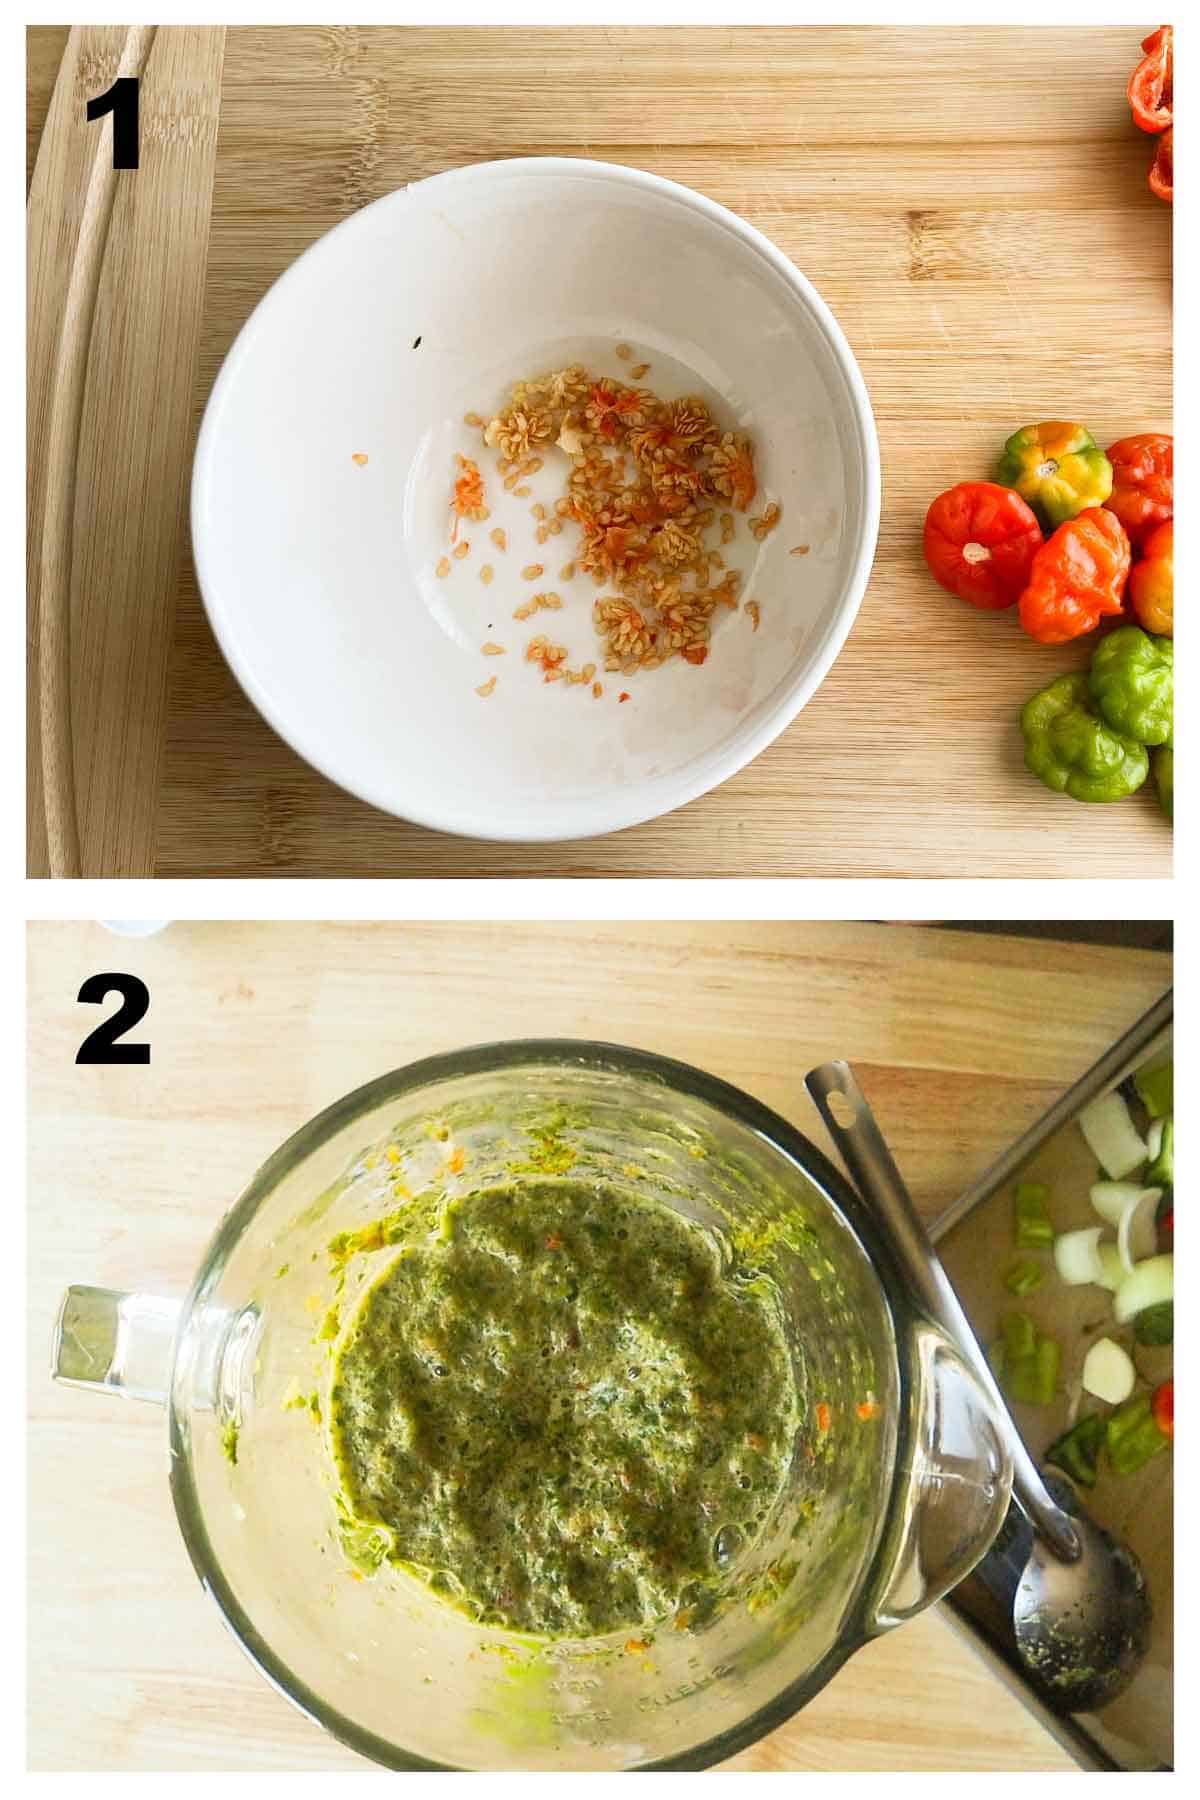 steps on how to make homemade sofrito.